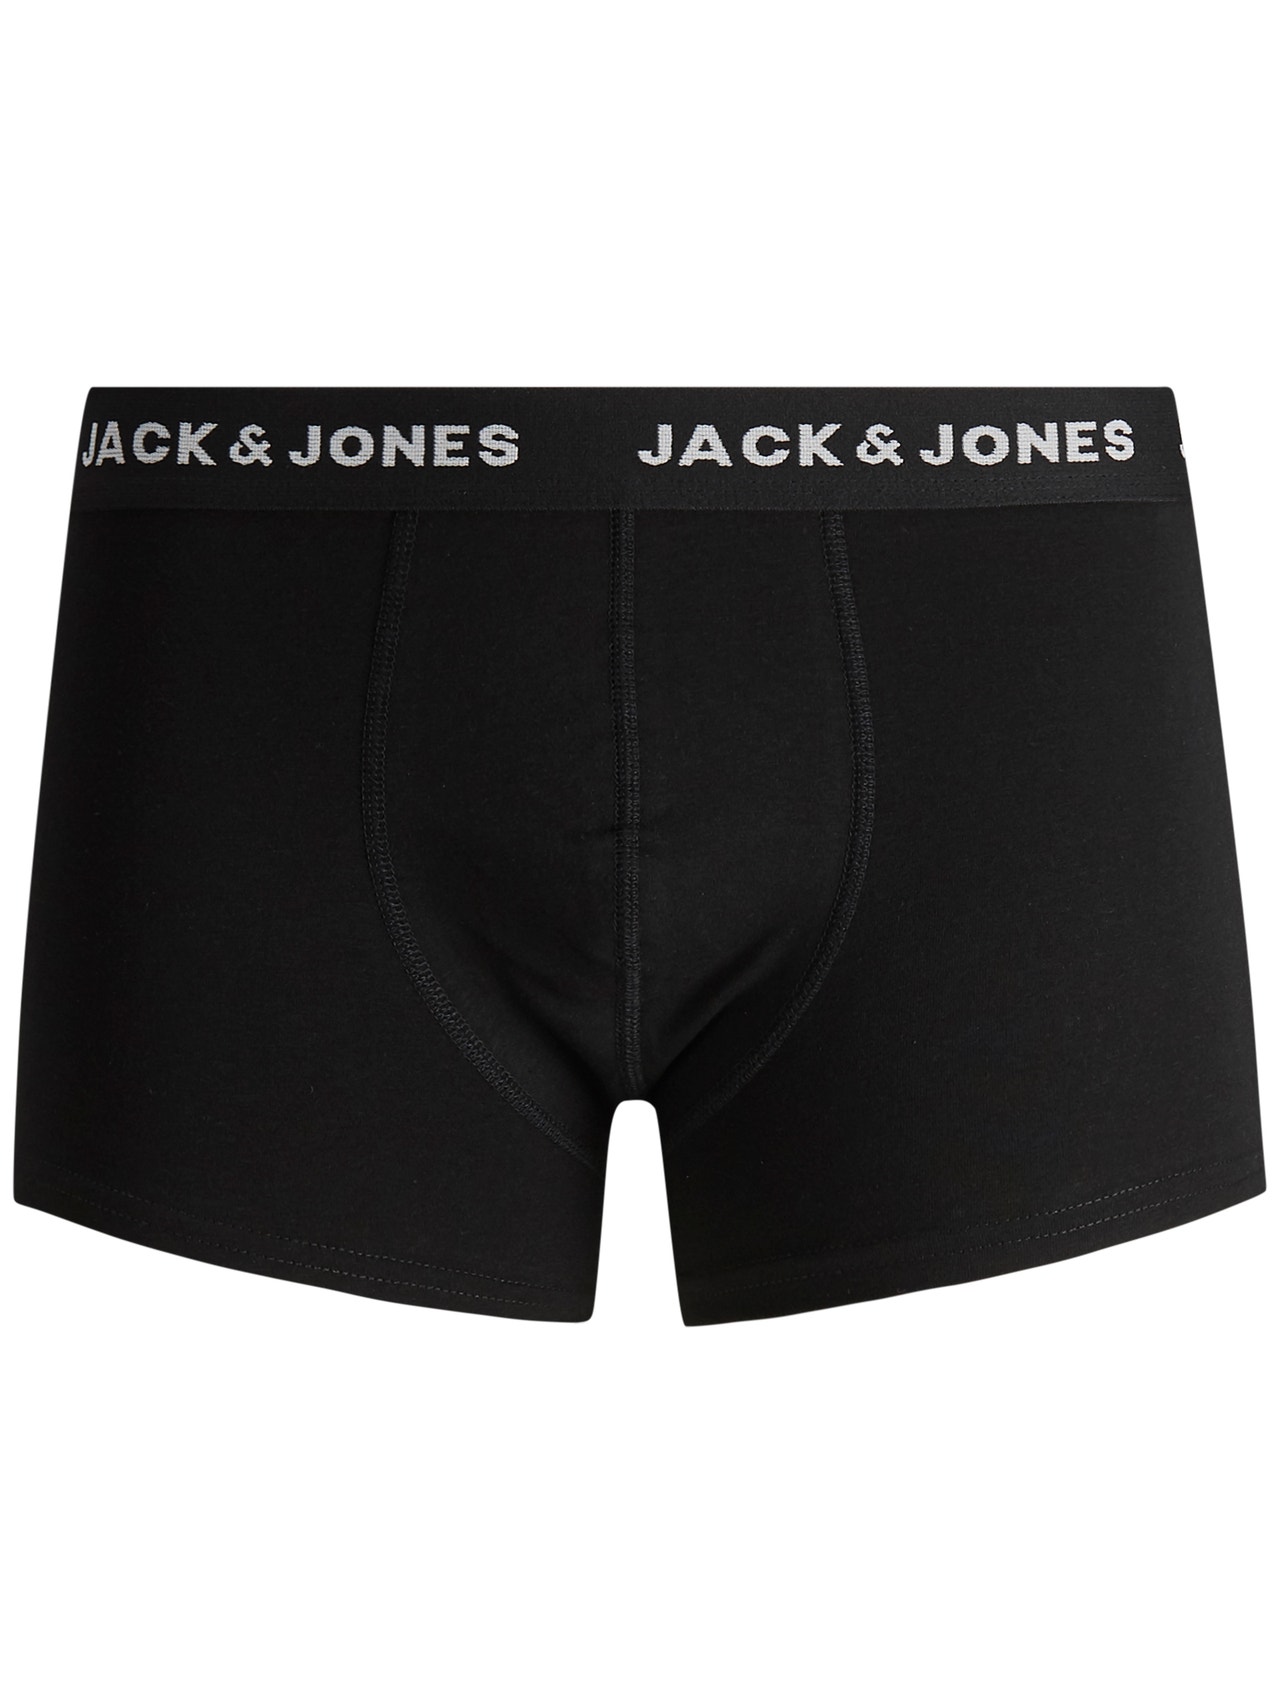 Jack & Jones 7 Trunks -Black - 12165587